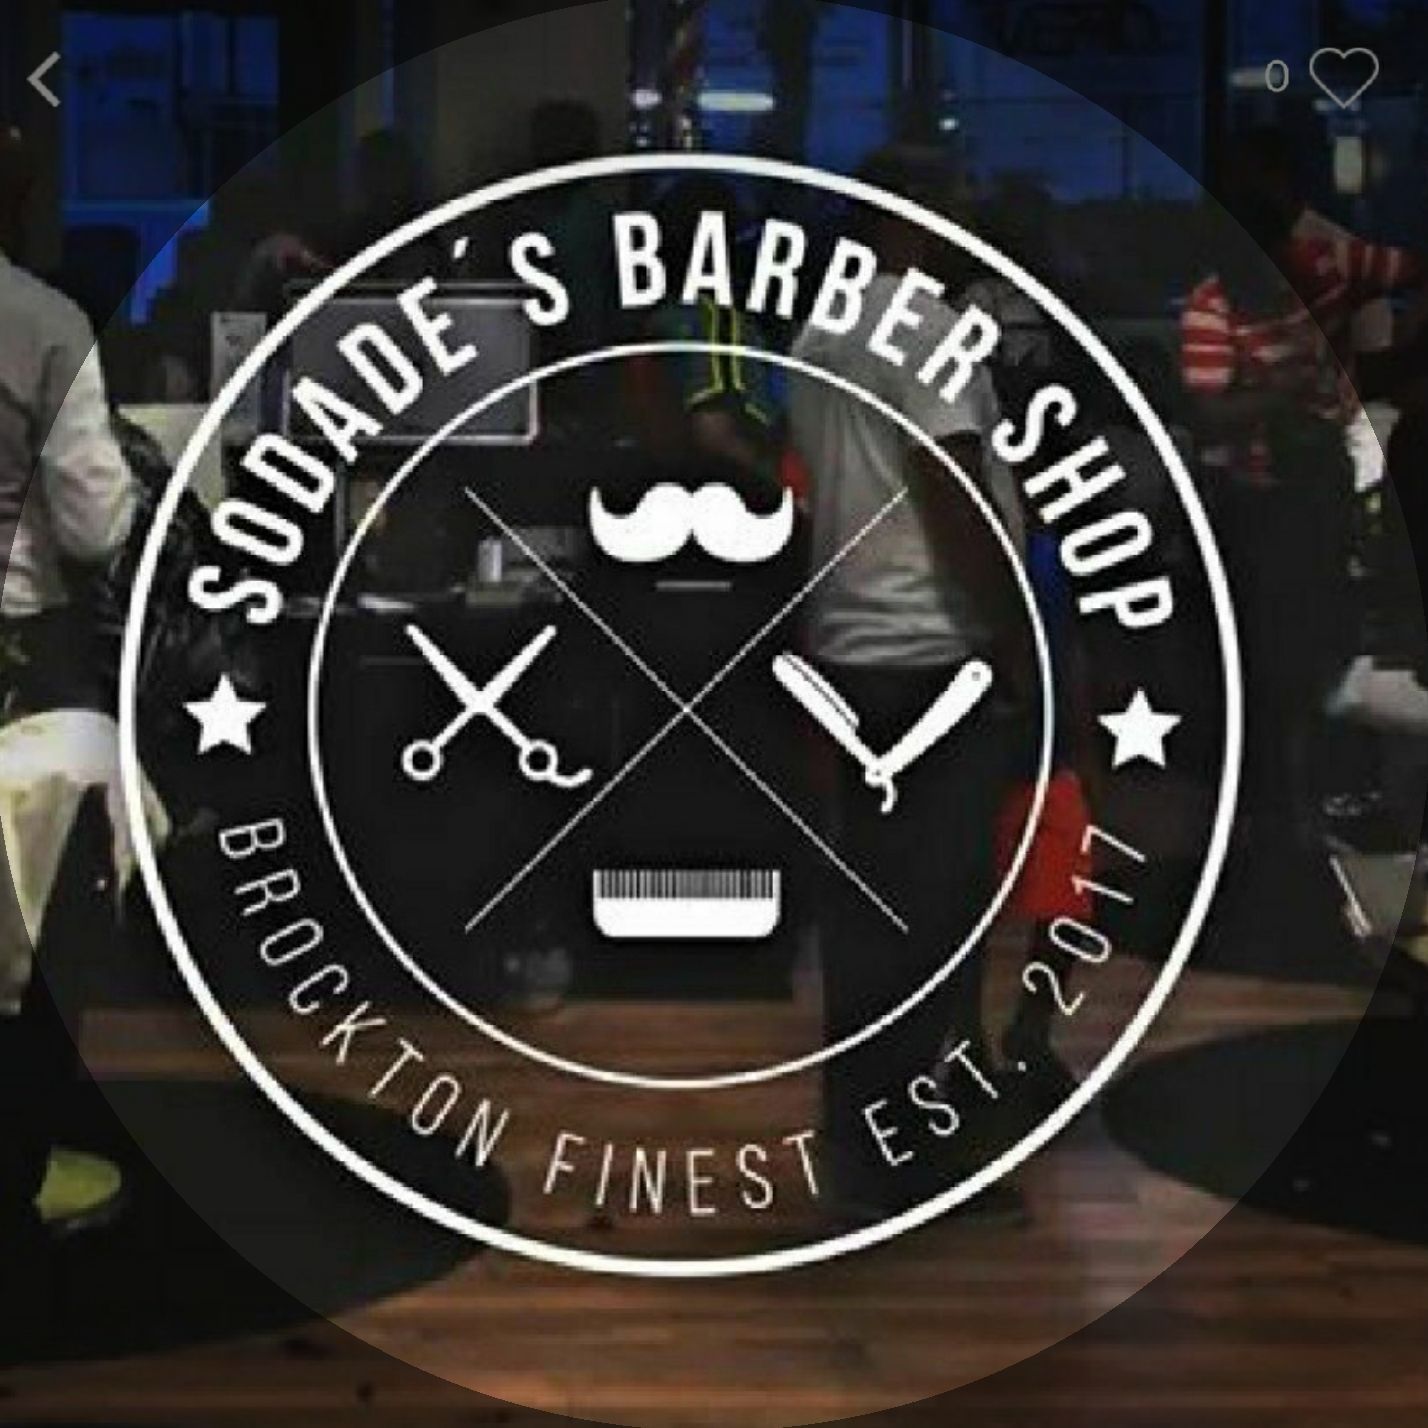 Sodade's barbershop, 1122 Main Street, Brockton, 02301